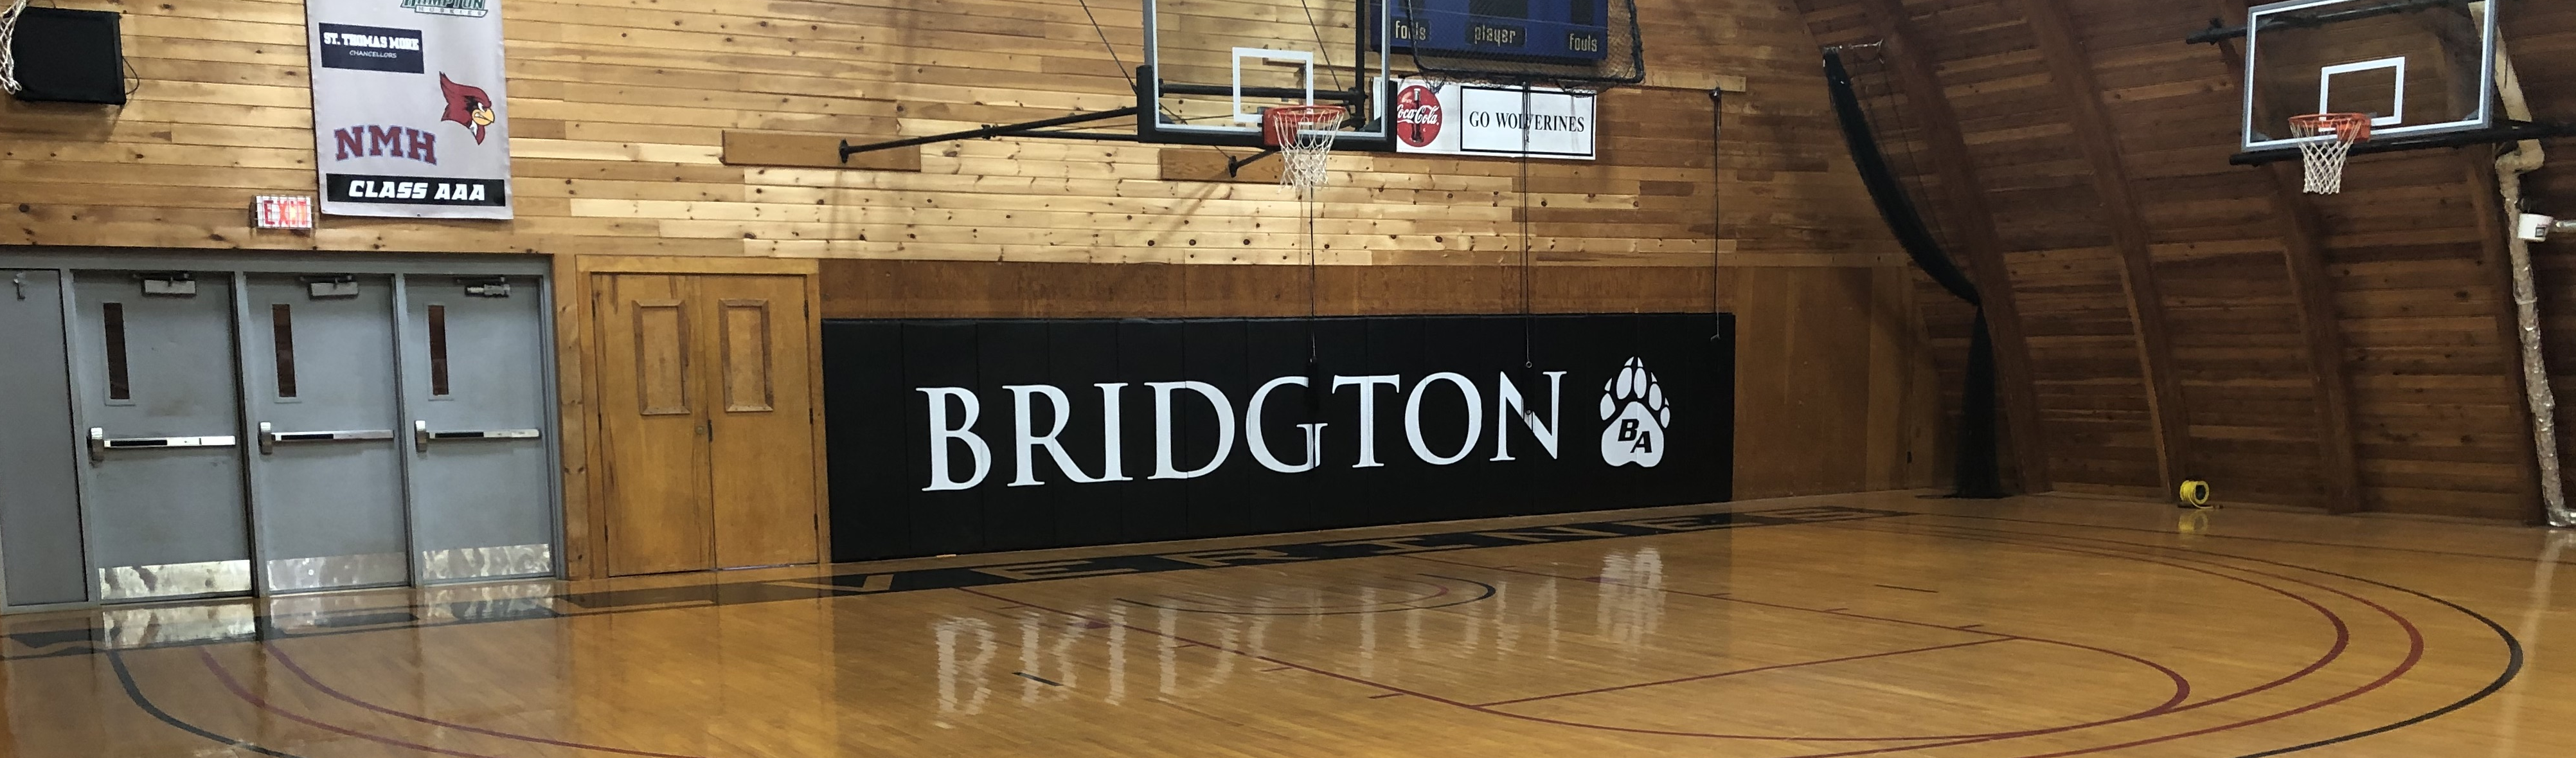 Exclusive videos from Bridgton Academy Basketball